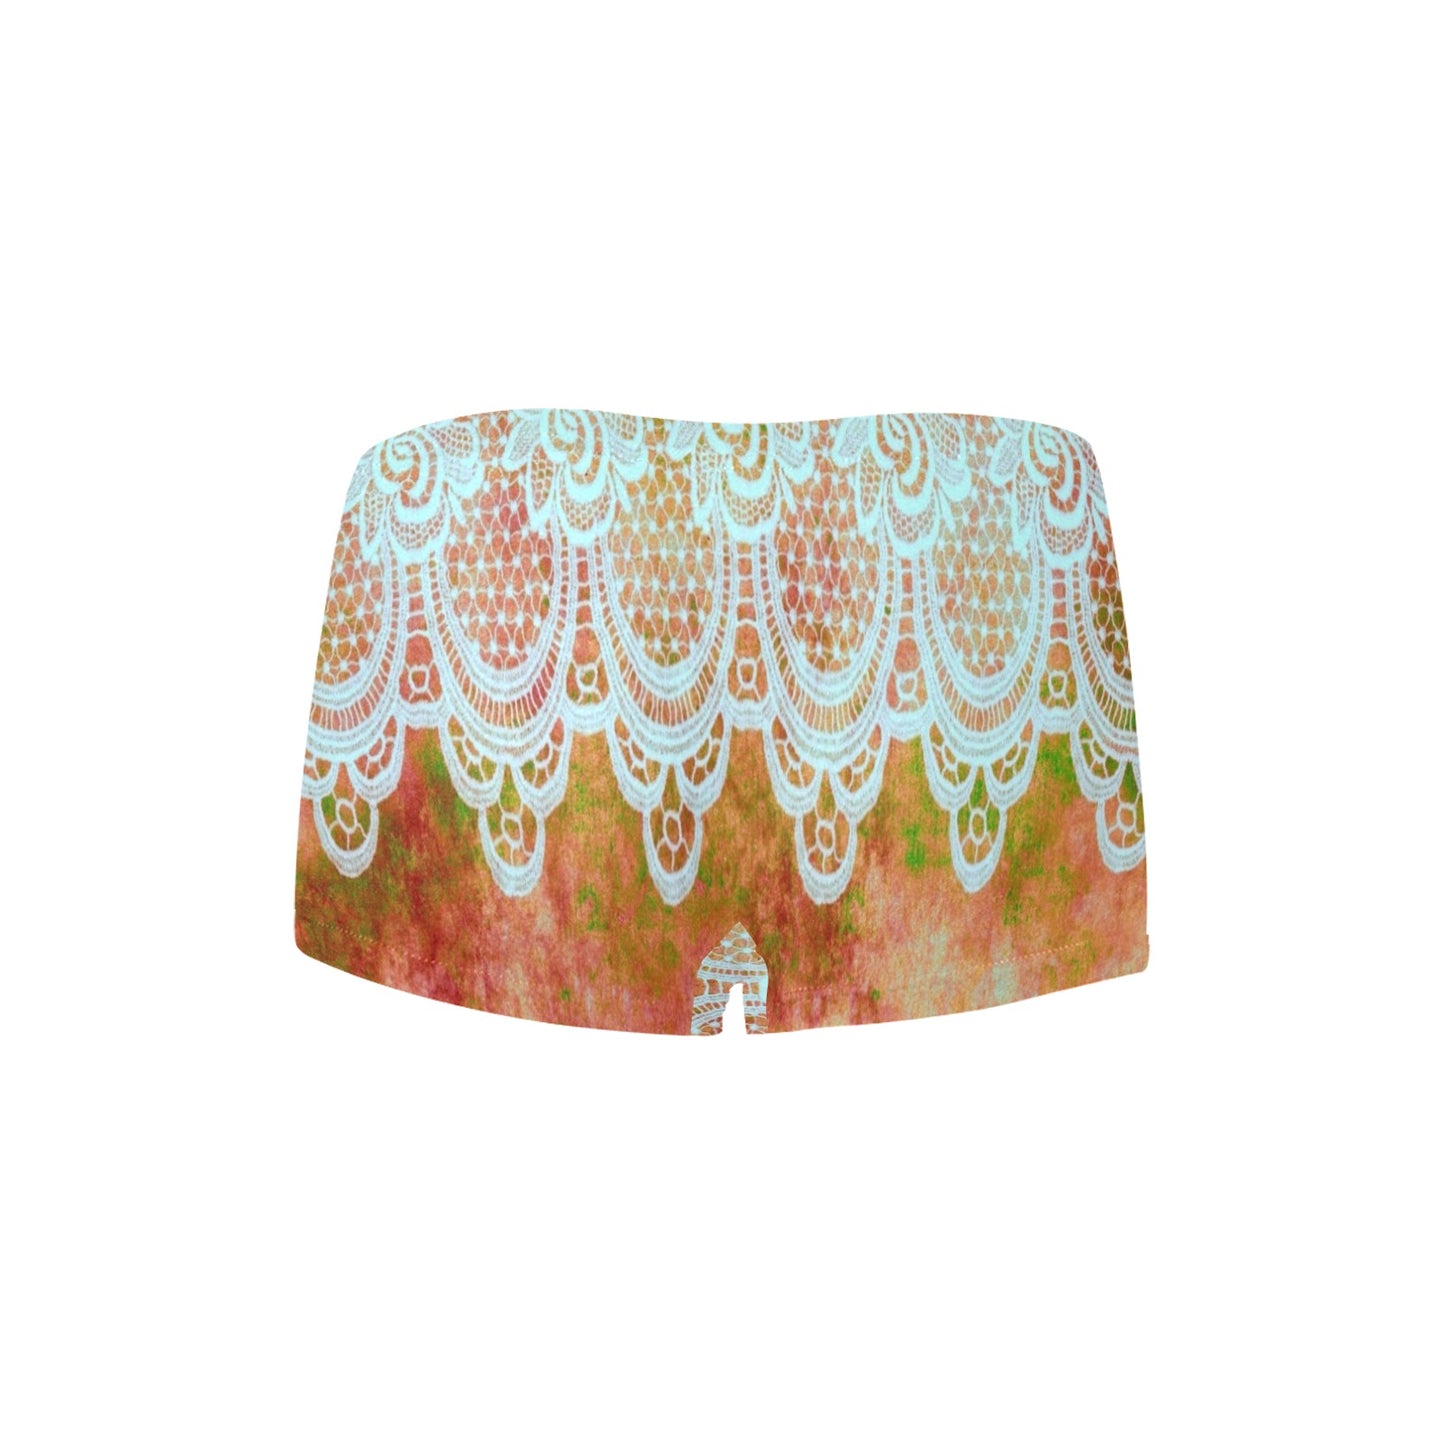 Printed Lace Boyshorts, daisy dukes, pum pum shorts, shortie shorts , design 31